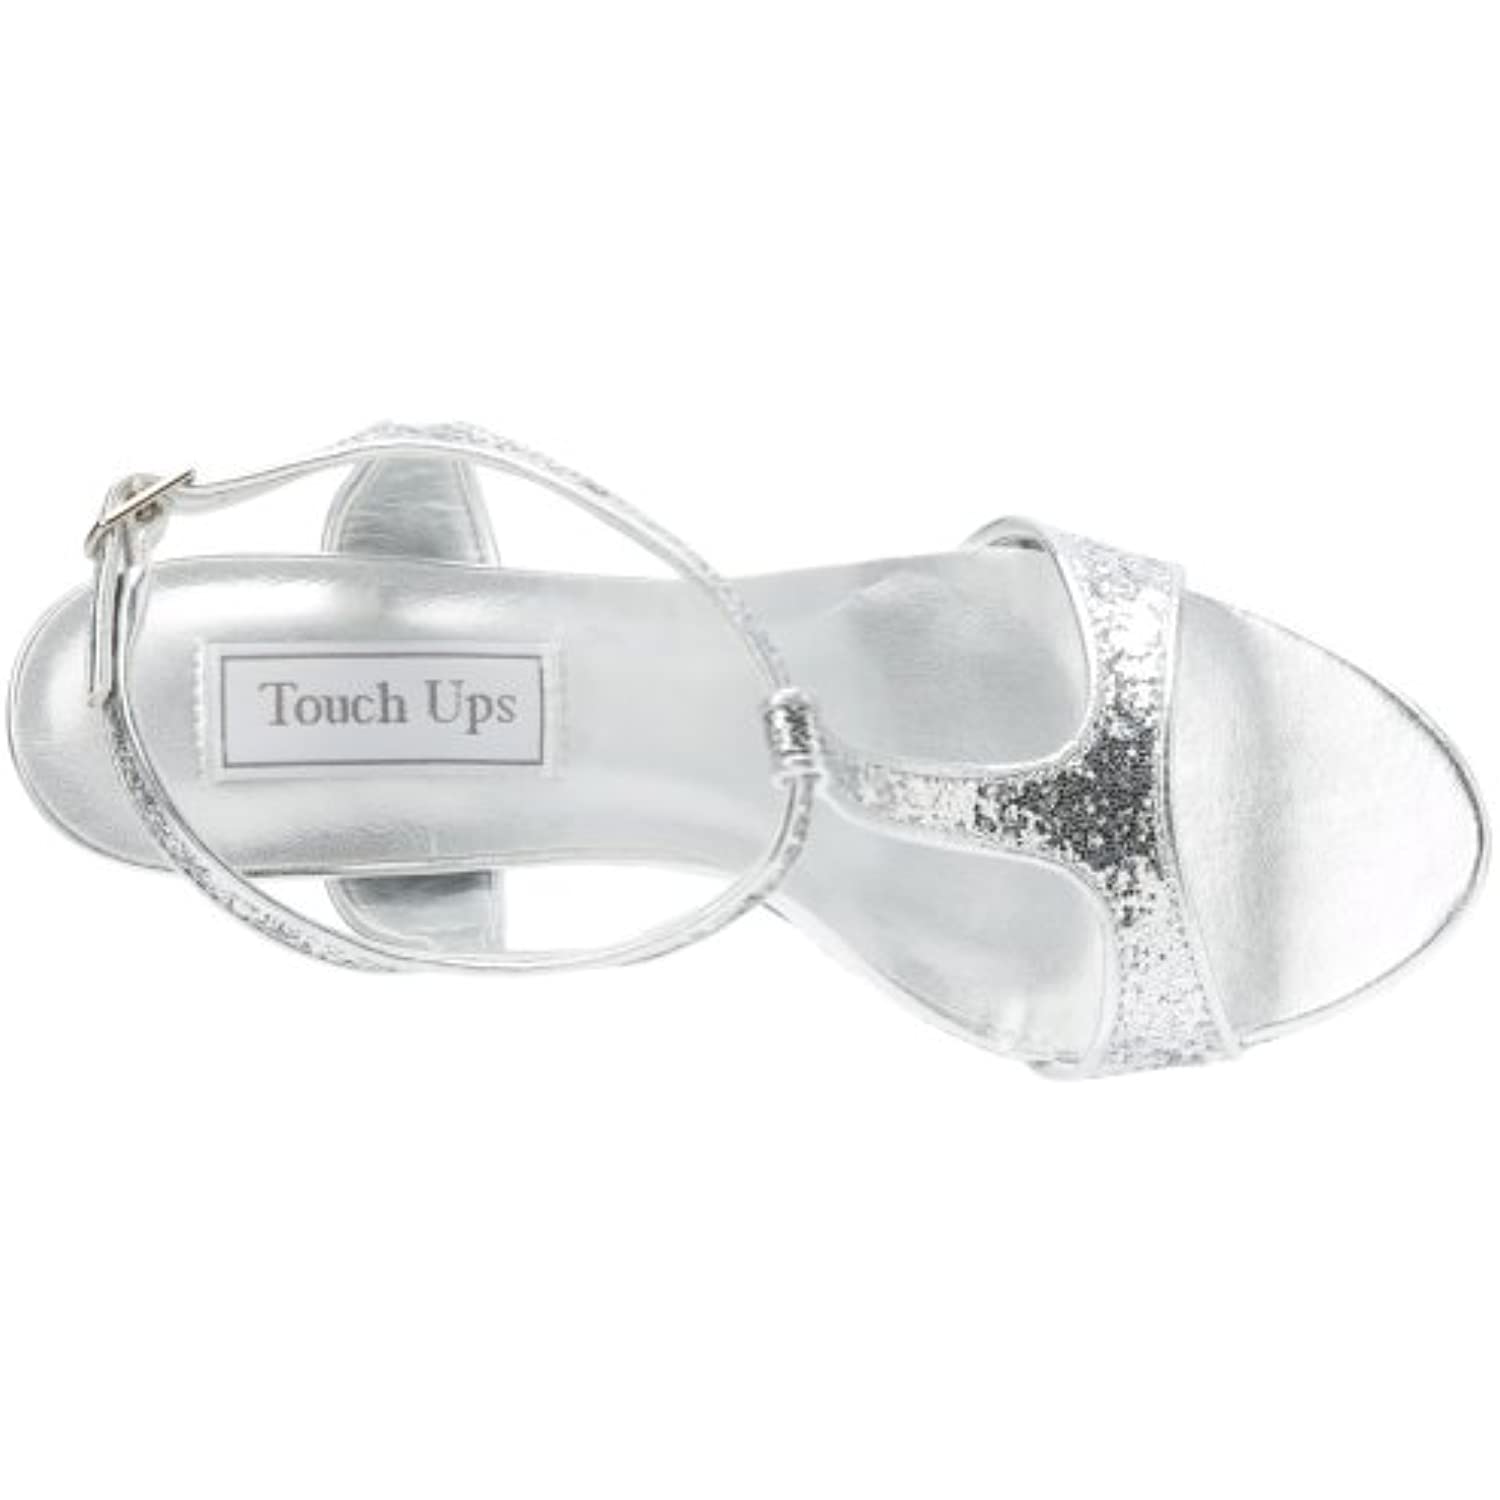 Touch Ups Women's Darcy Platform Sandal,Silver Glitter,6 M US